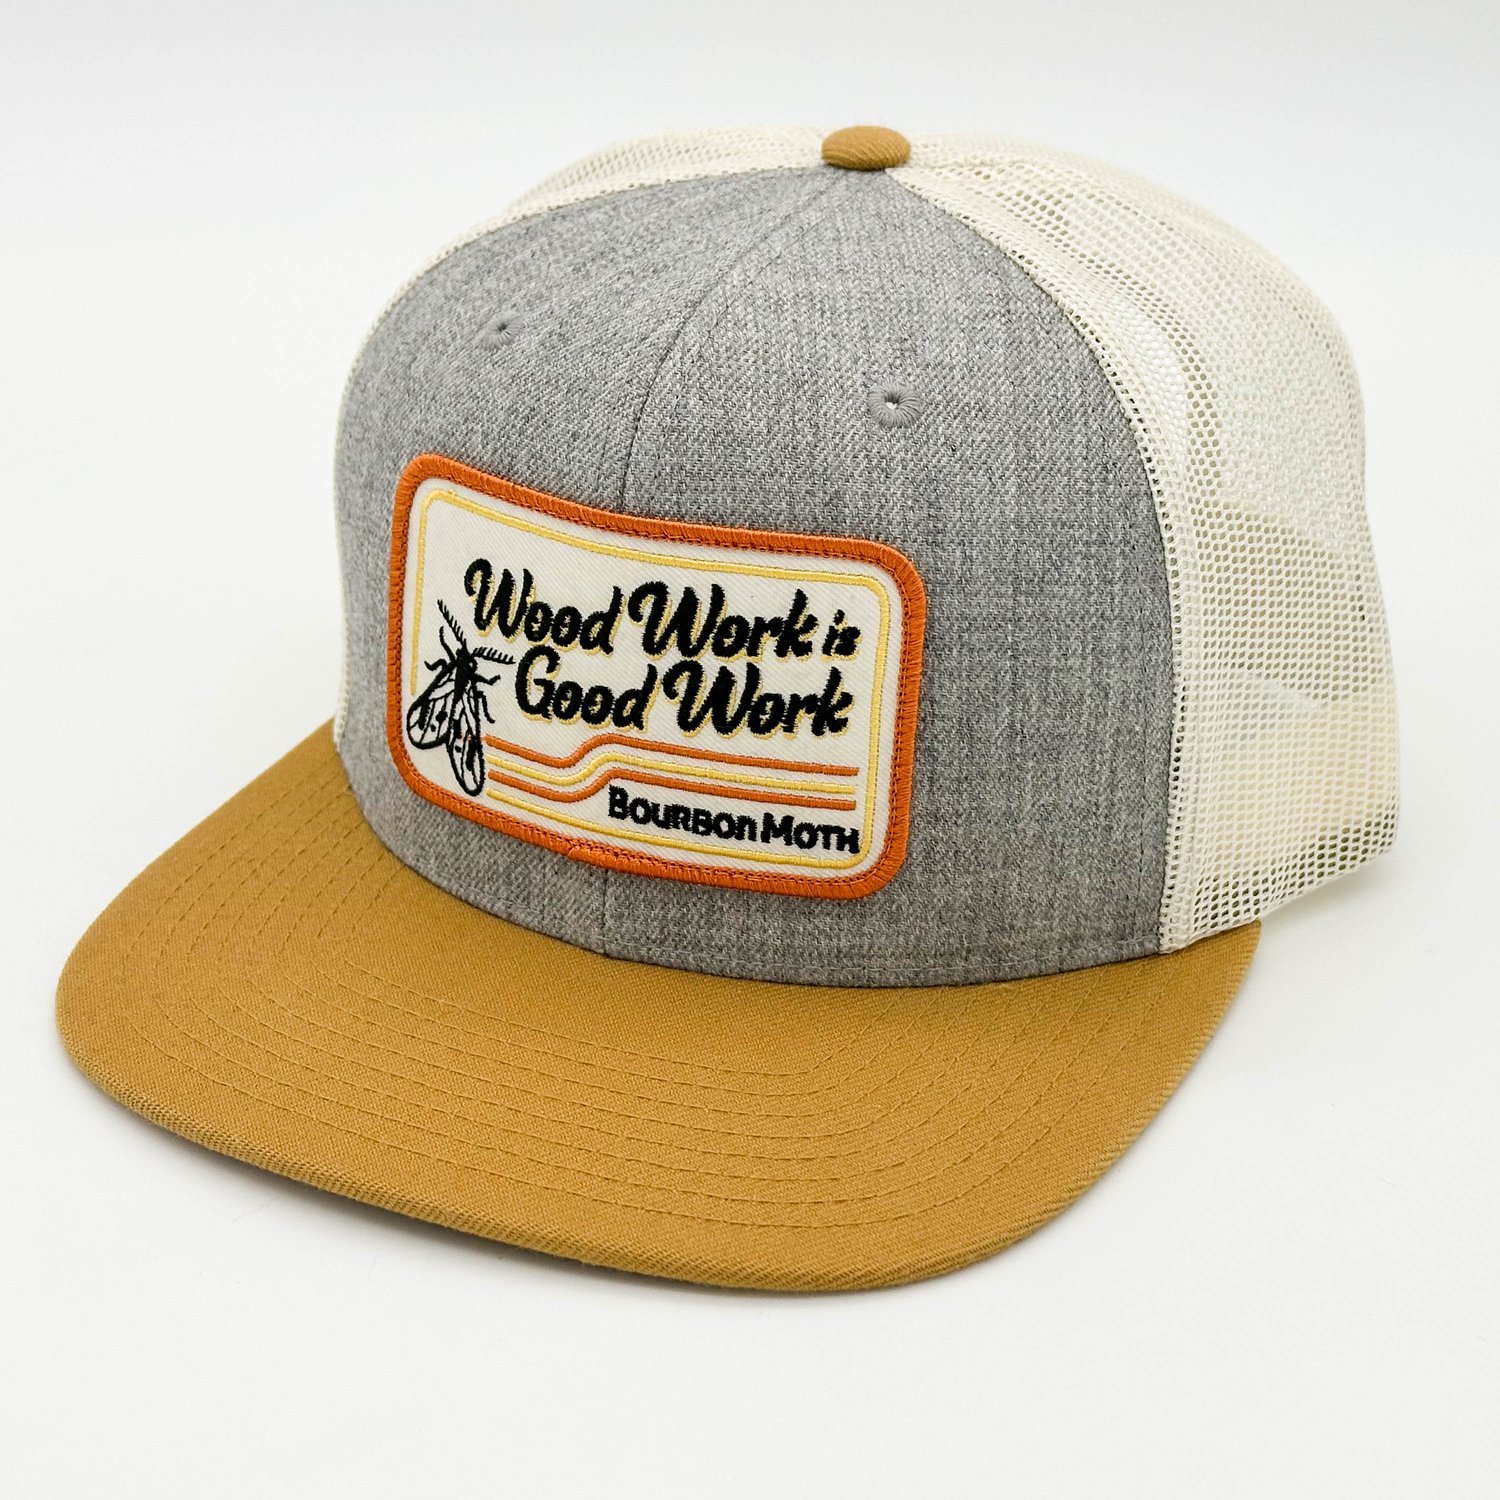 Wood Work Good Tri-Color Hat — Bourbon Moth Woodworking Co